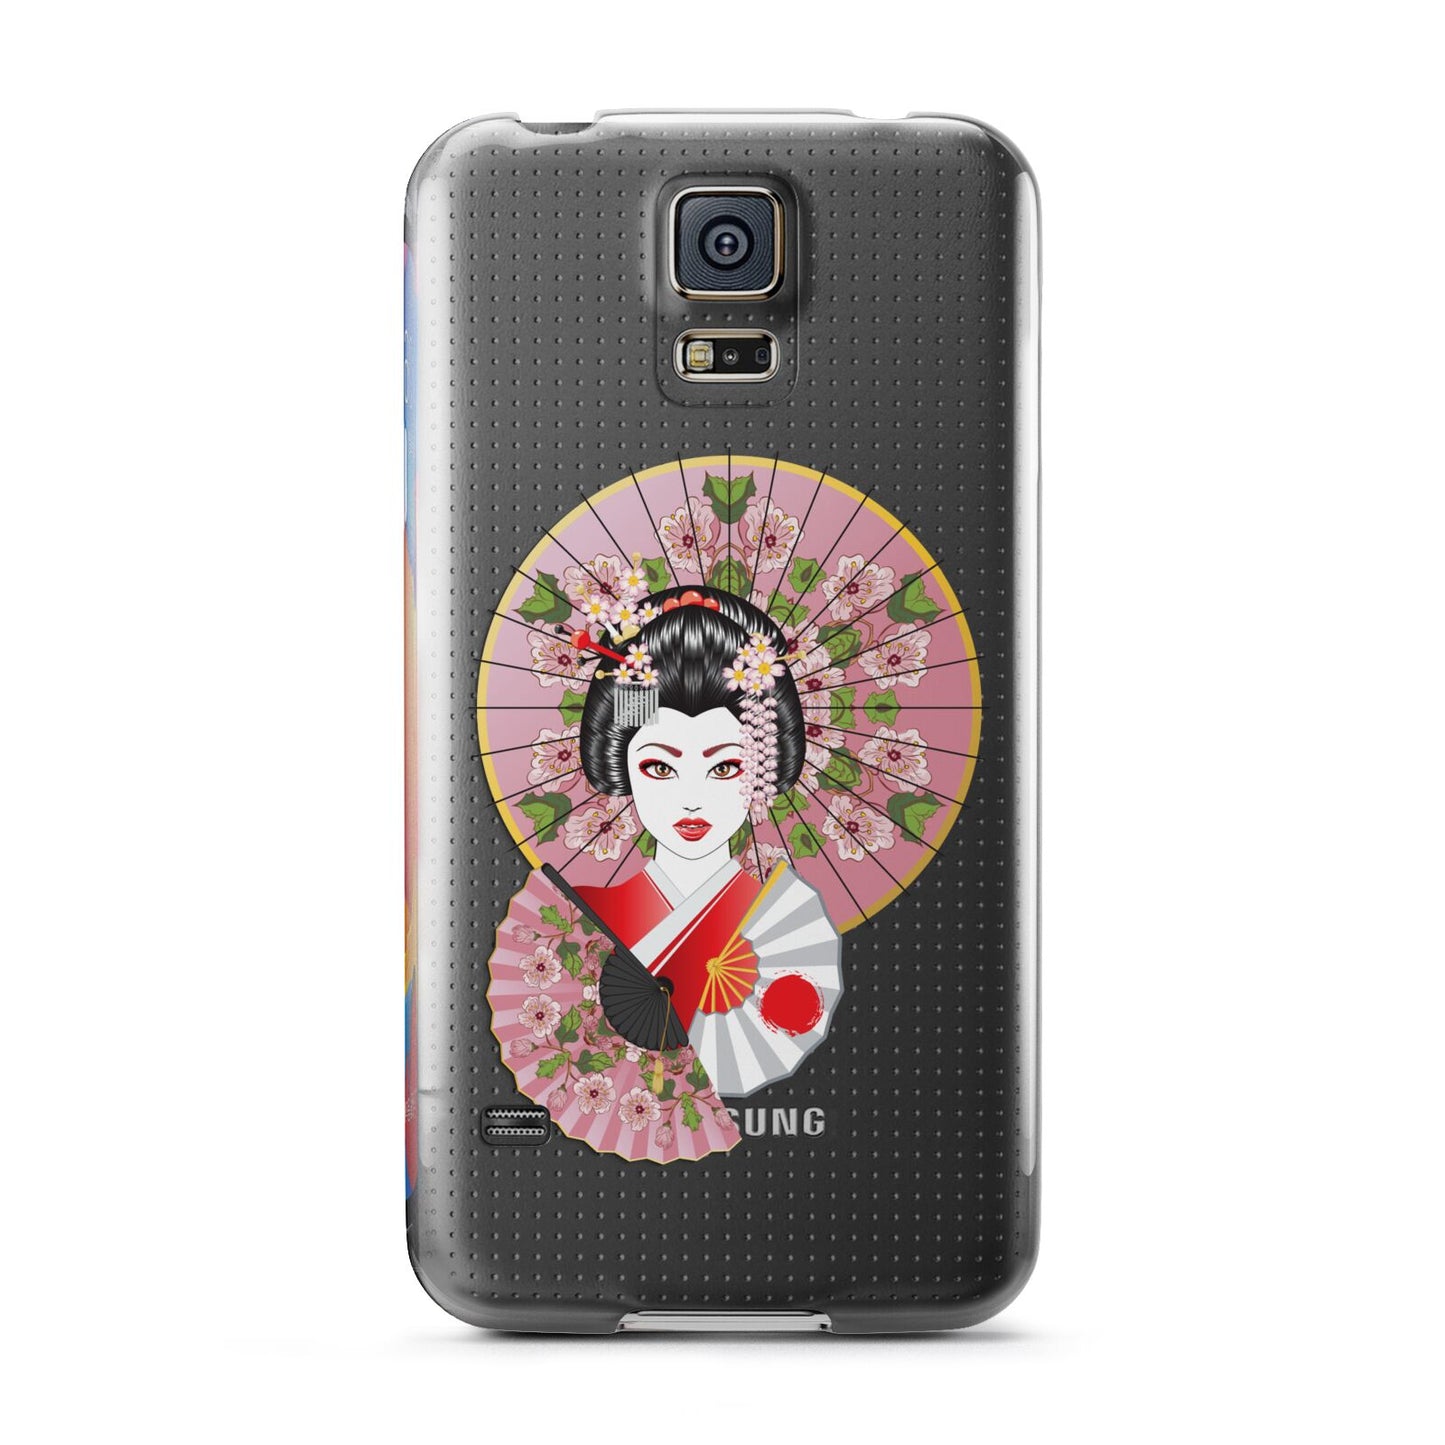 Geisha Girl Samsung Galaxy S5 Case